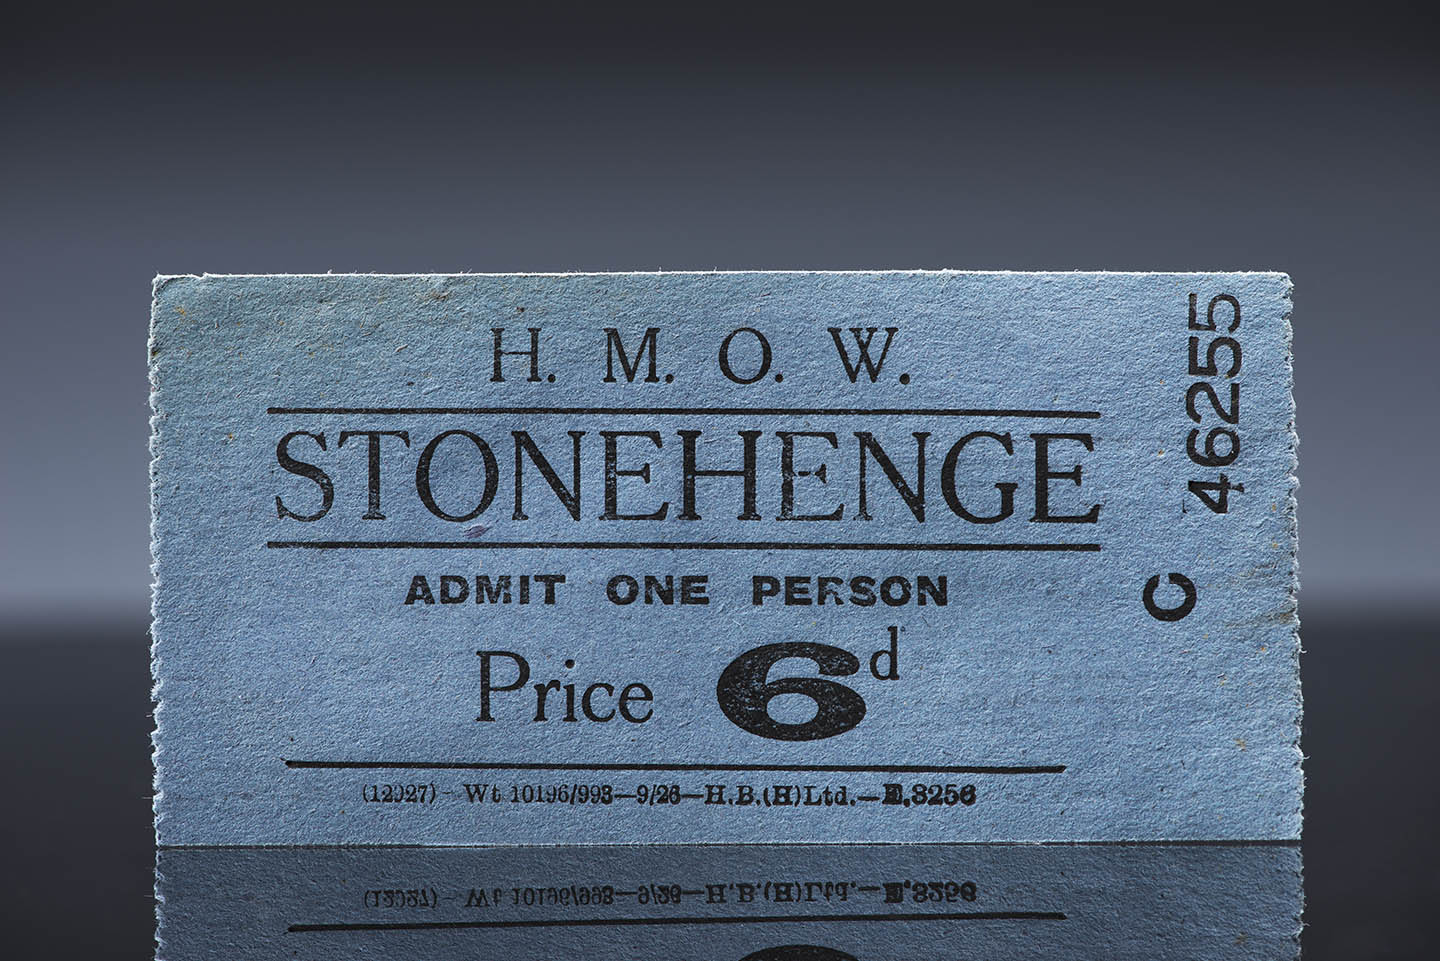 Early Stonehenge entrance ticket